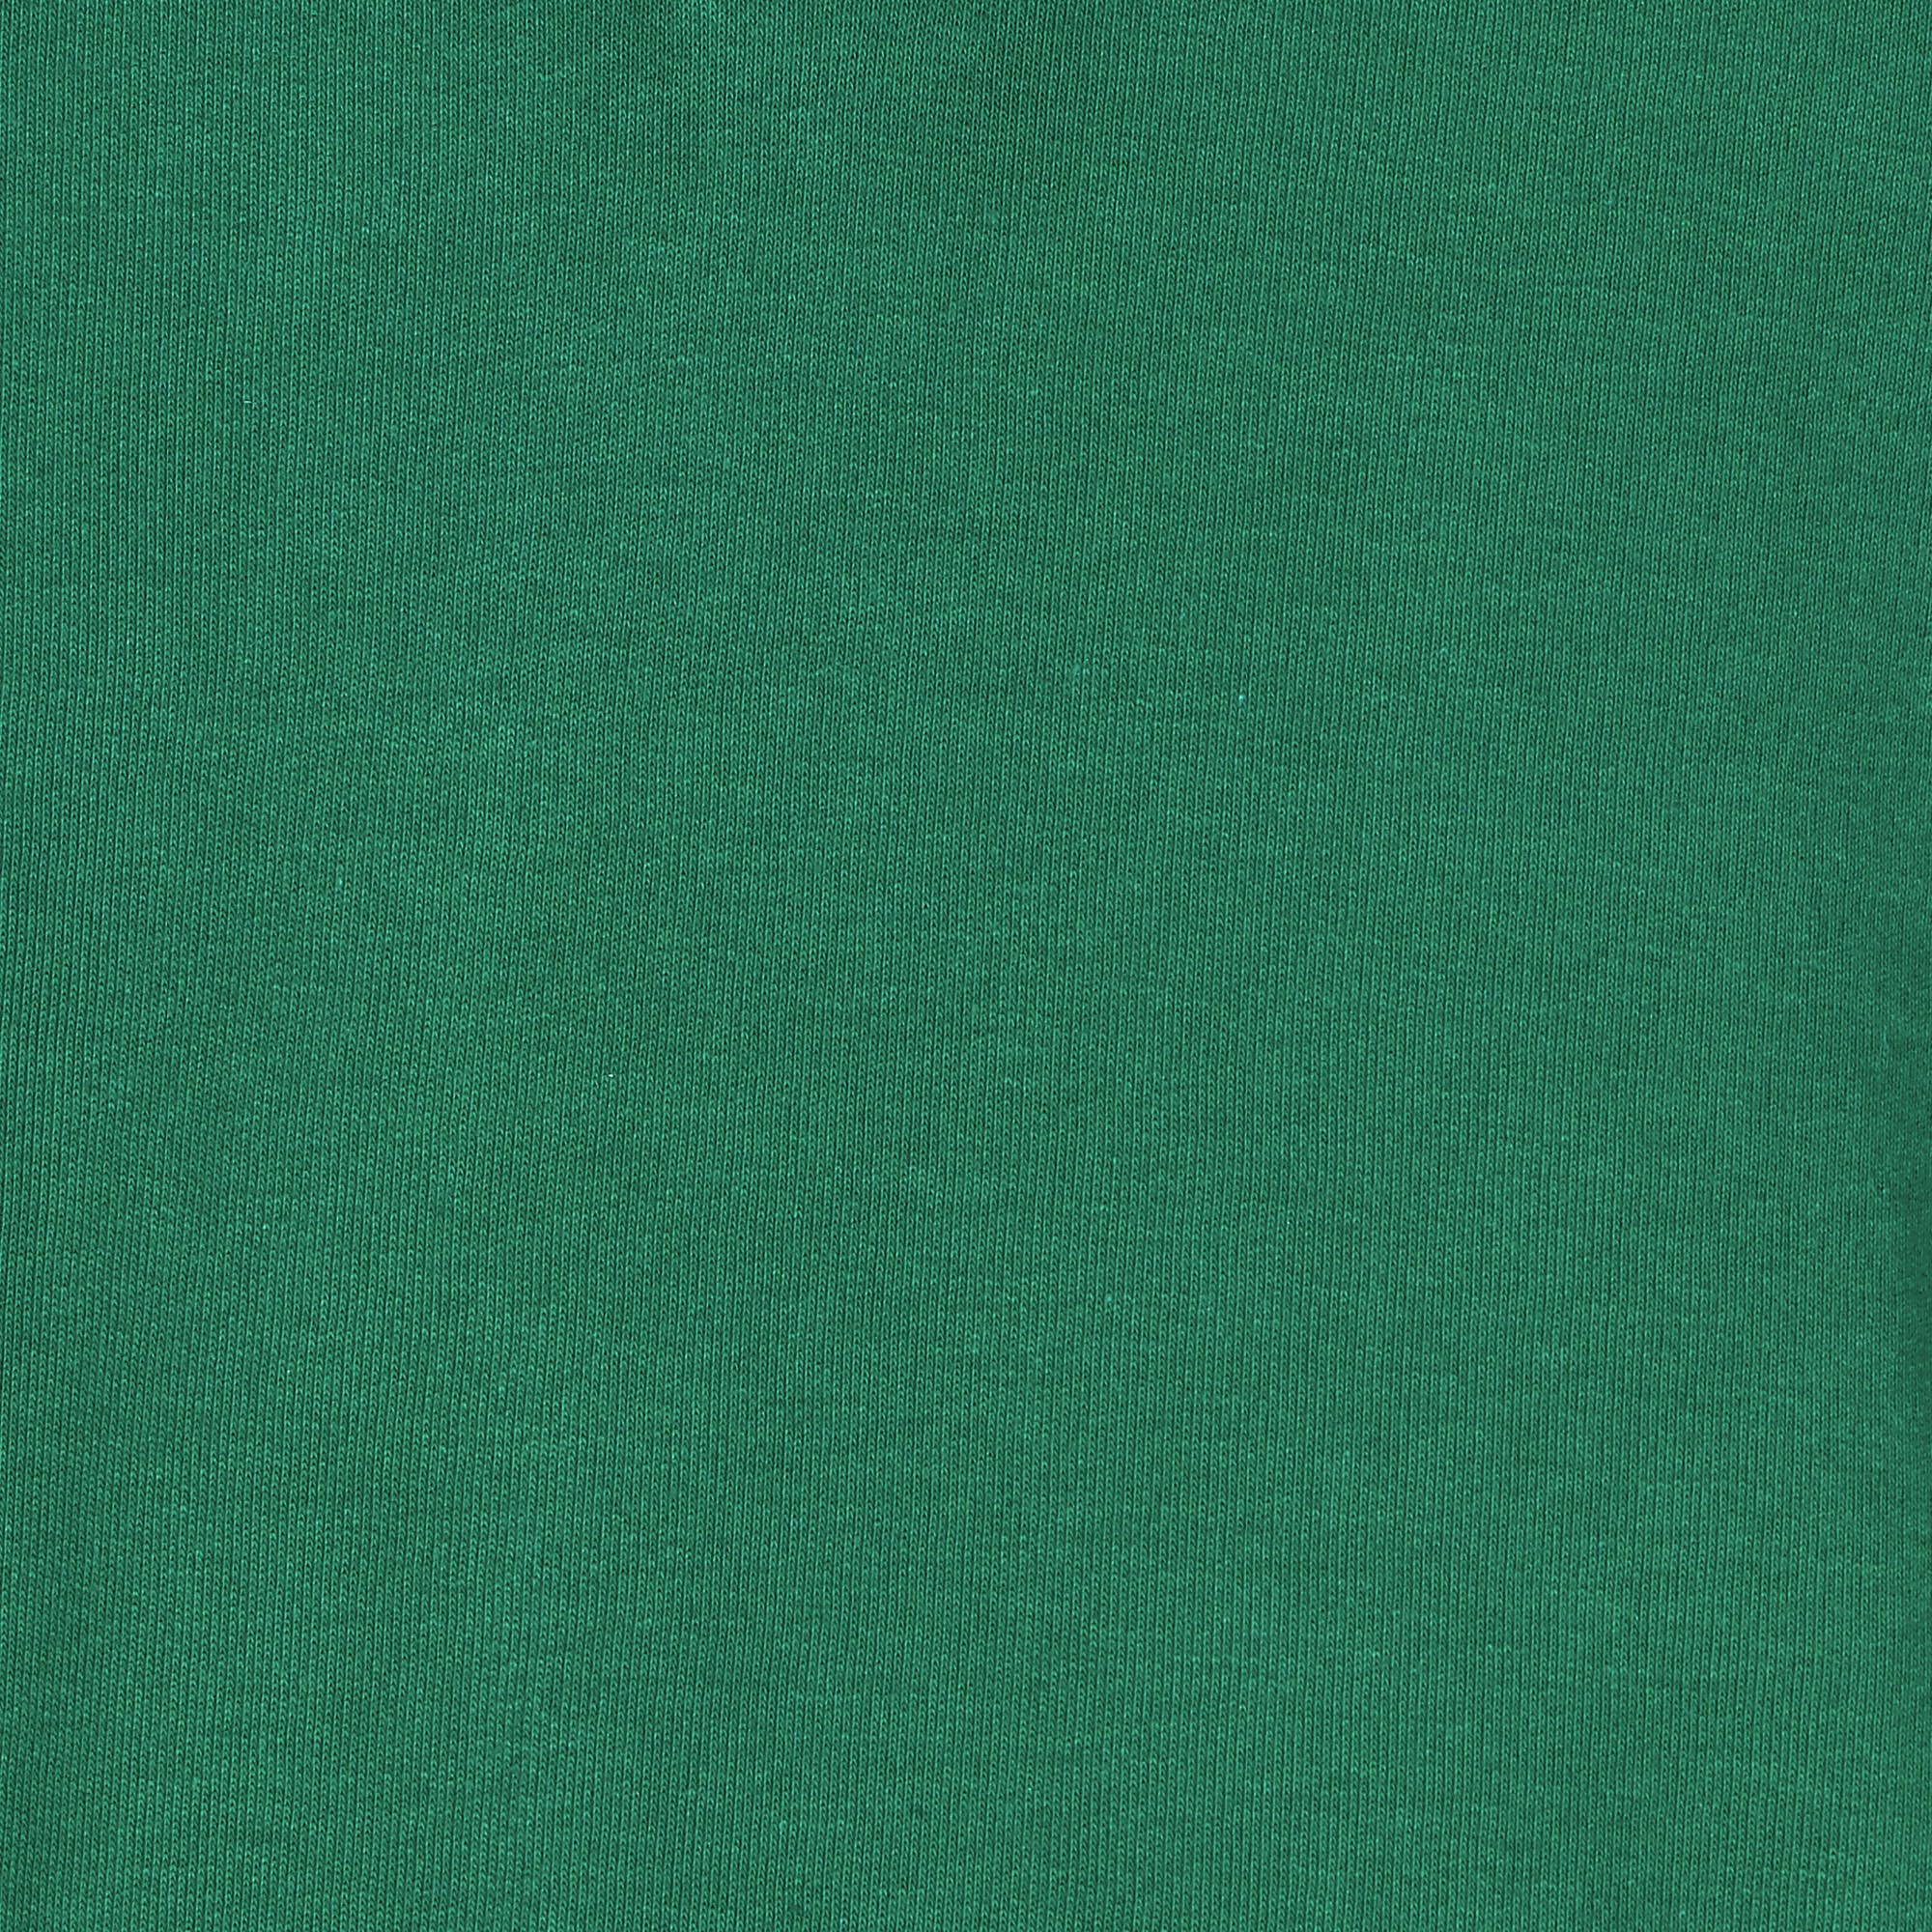 Мужская футболка-поло Diva Teks зелёная (DTD-09), цвет зелёный, размер 54-56 - фото 6